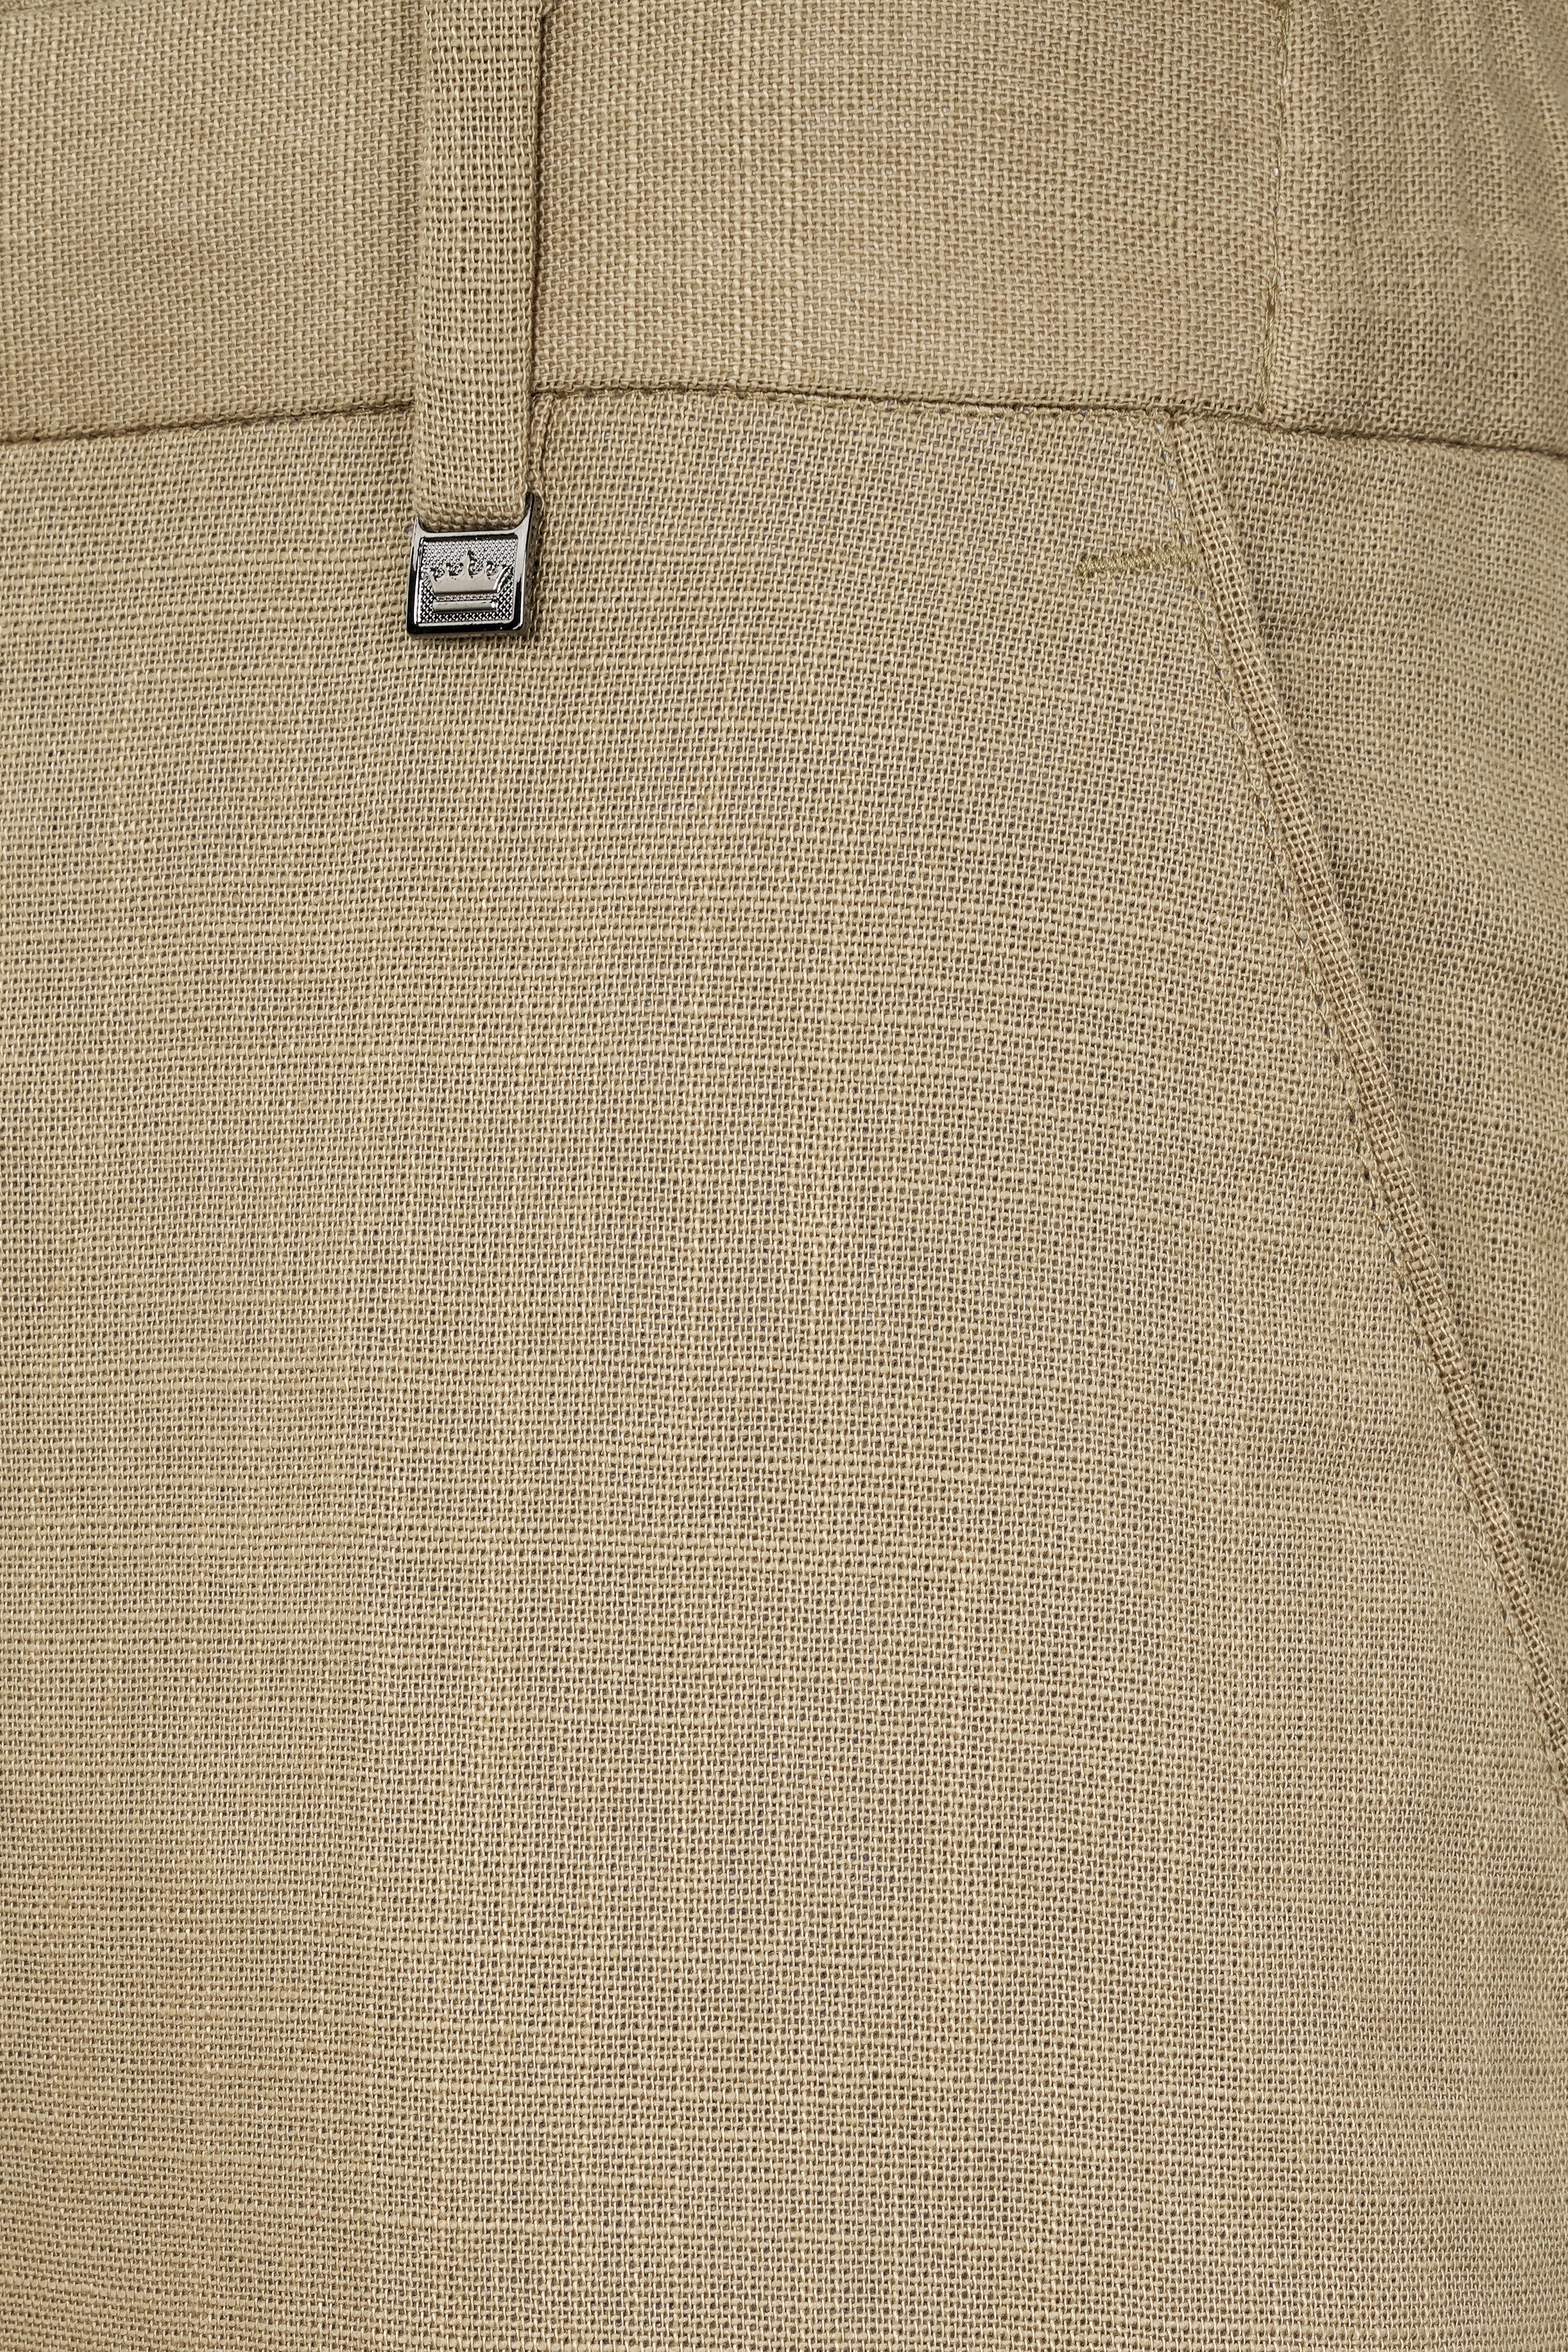 Sandrift Brown Luxurious Linen Stretchable Waistband Pant